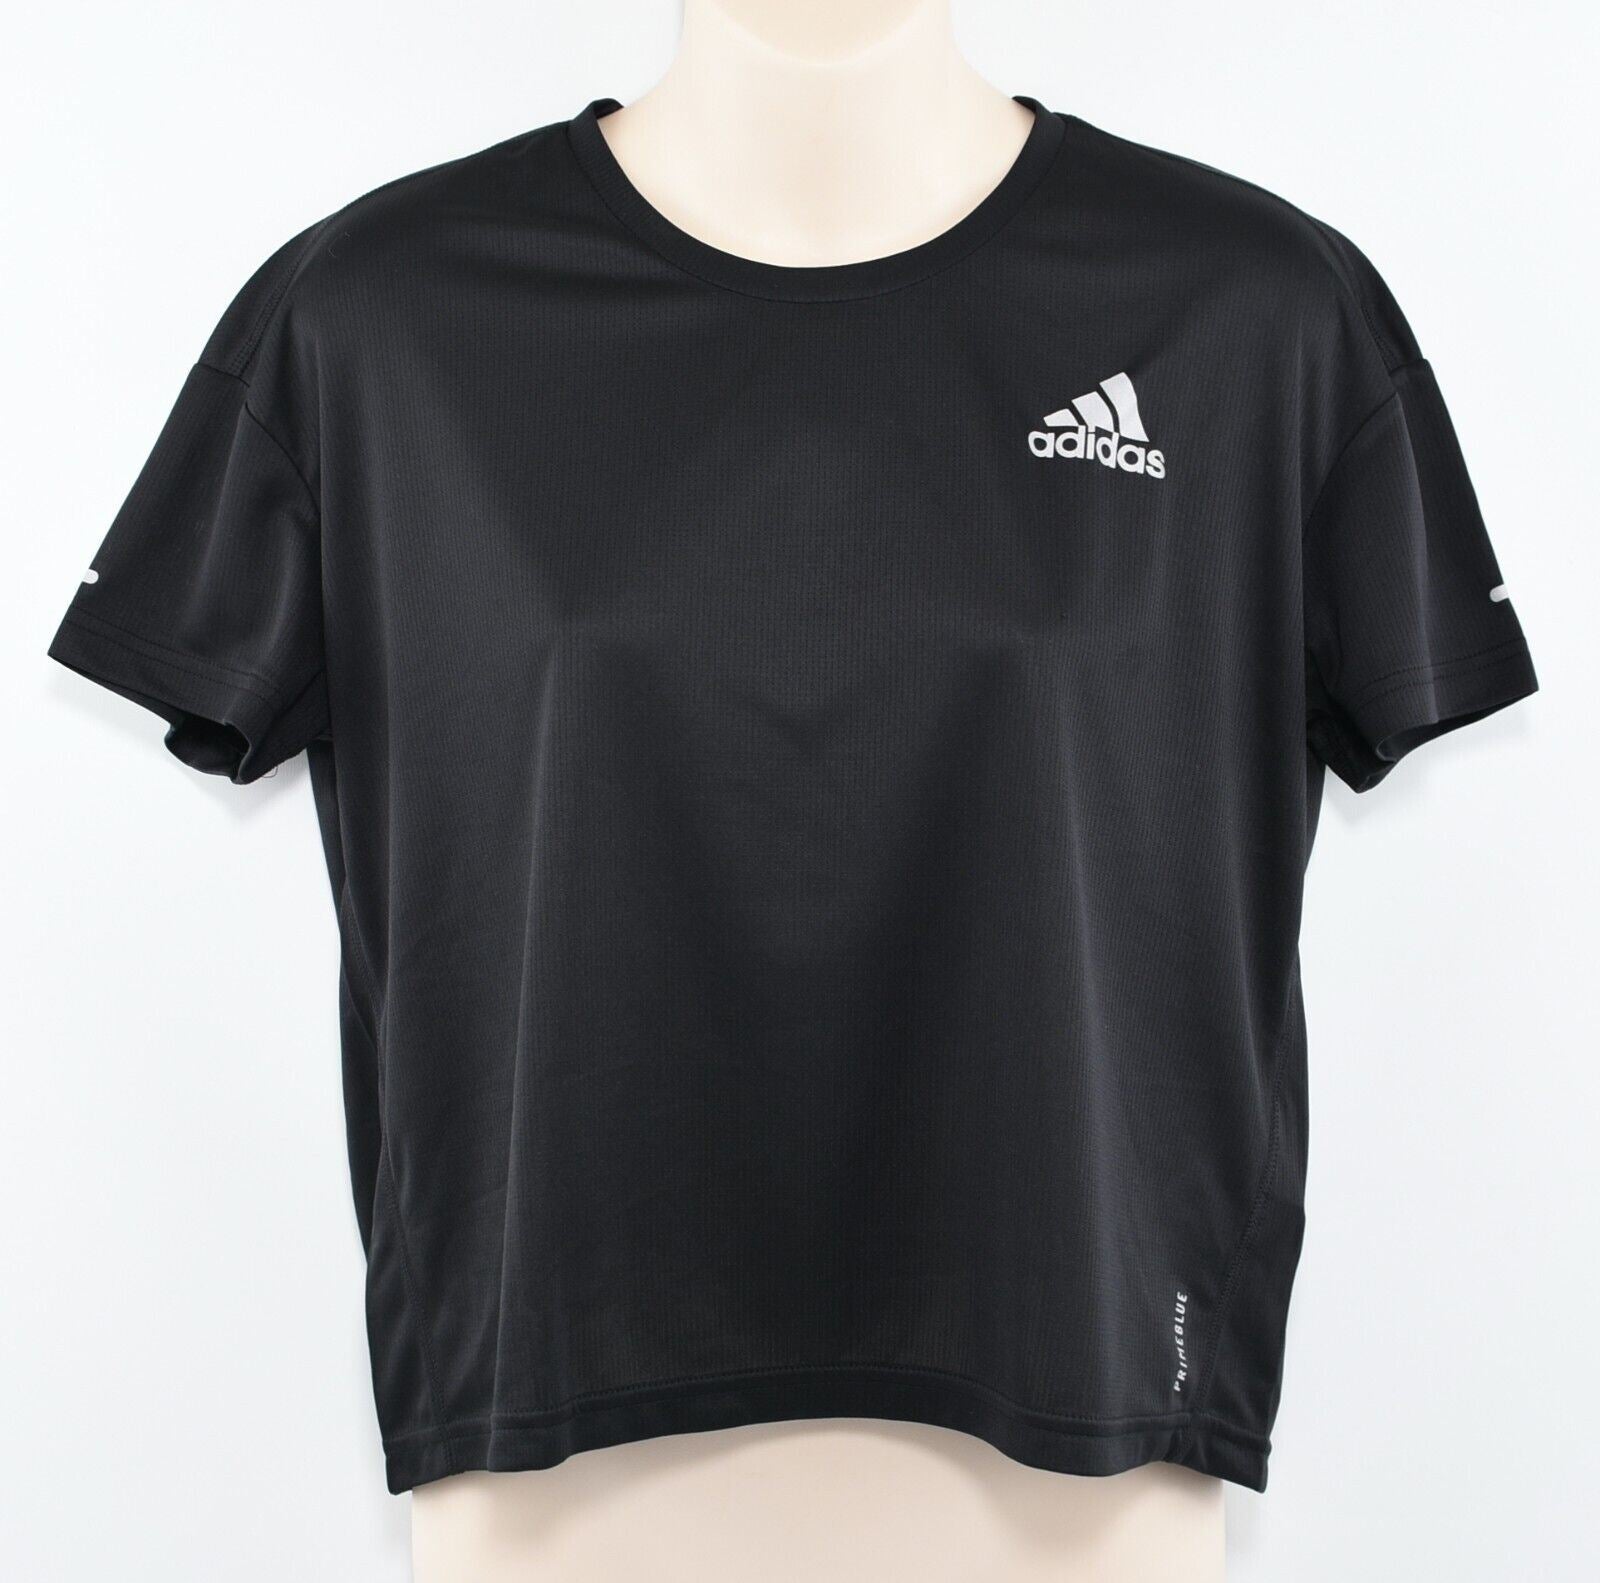 ADIDAS Women's Primeblue Sports Running Tee, T-shirt, Black, size XS (UK 6)